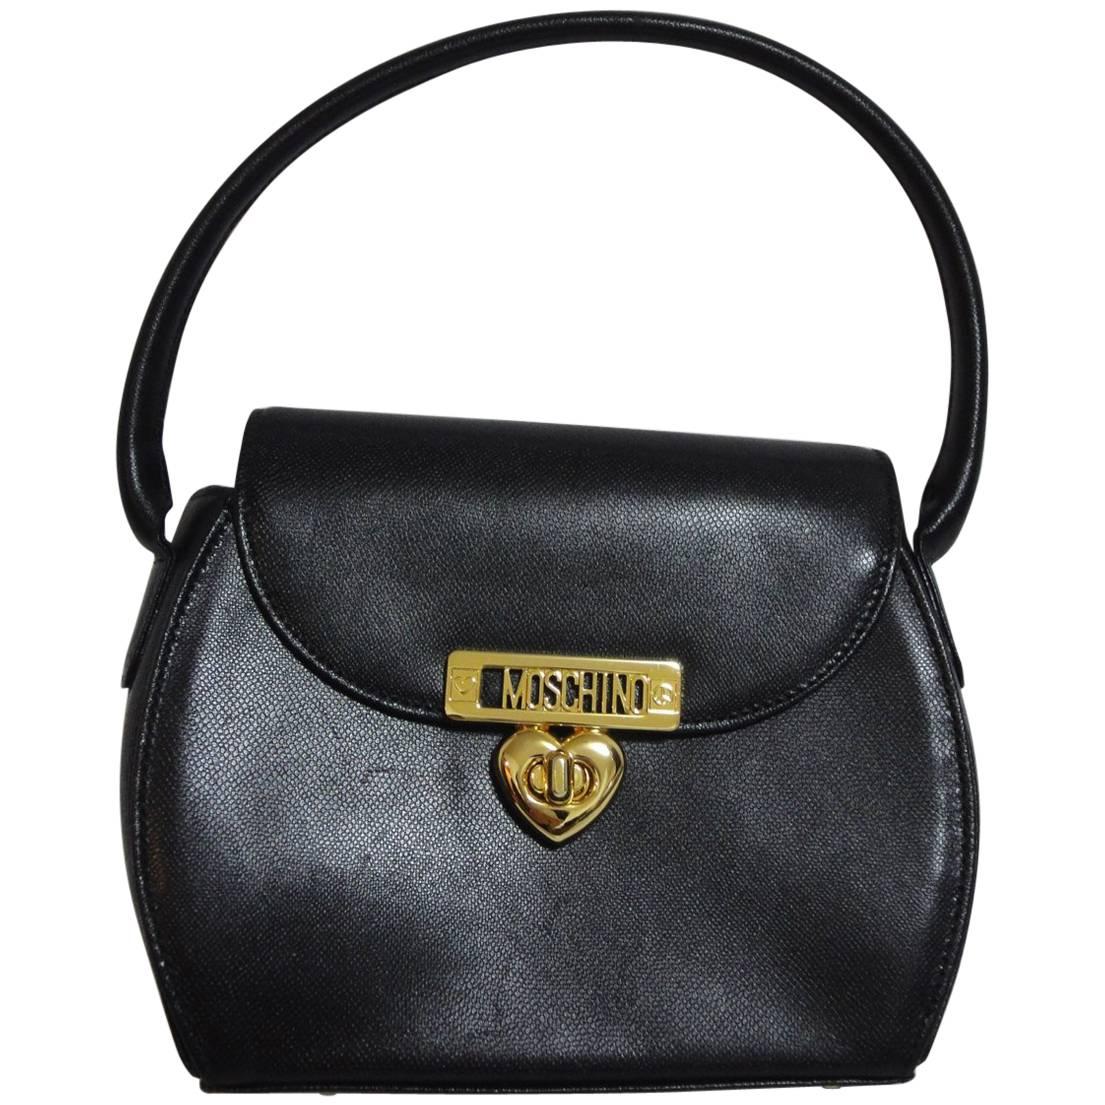 Vintage MOSCHINO black leather handbag, oval shape purse with golden logo motif. For Sale